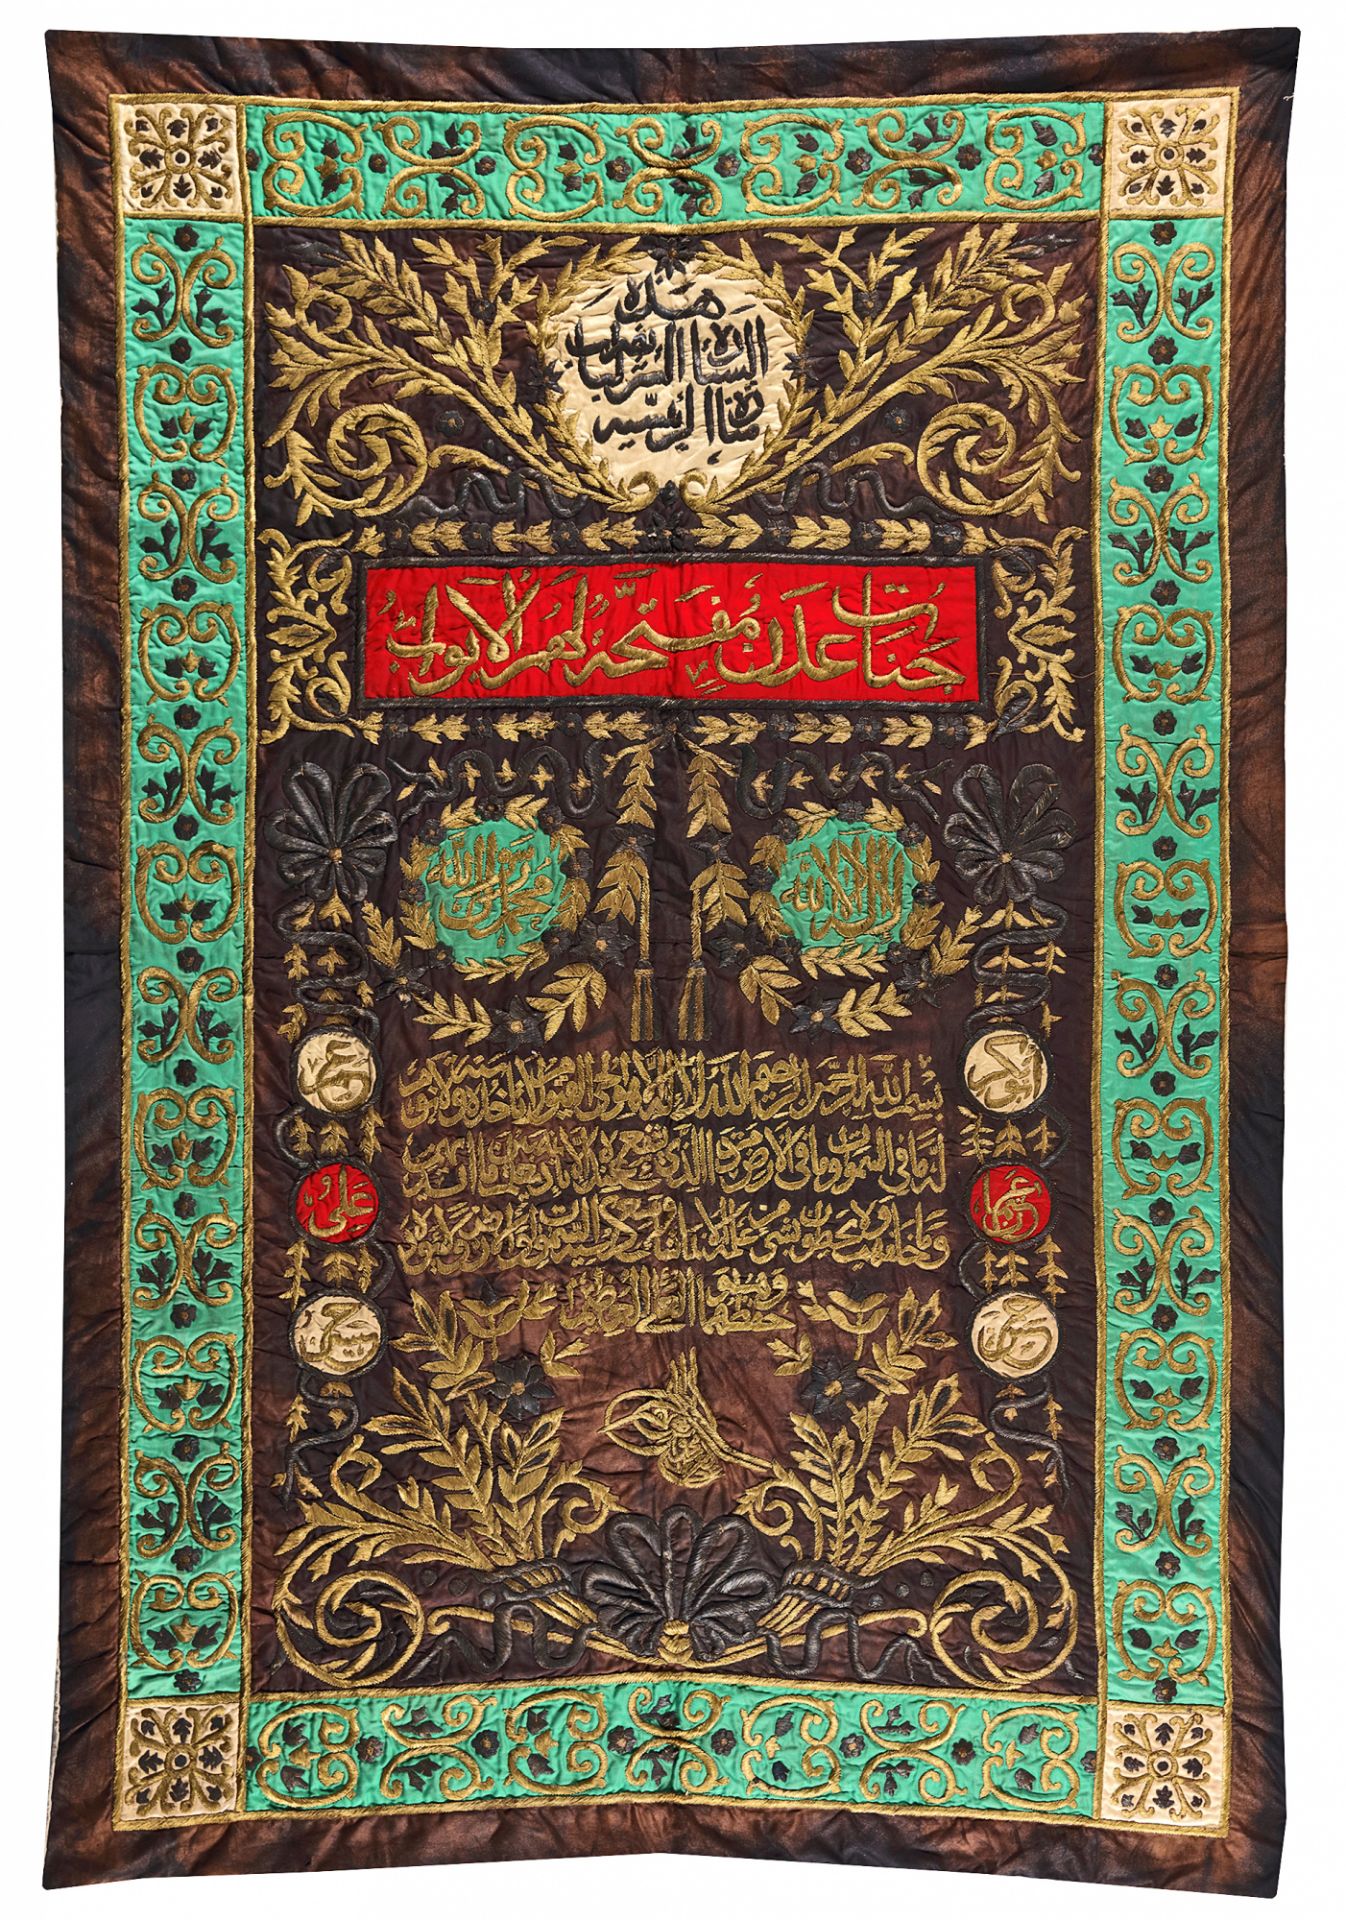 An Ottoman curtain from the internal door of the Kaaba